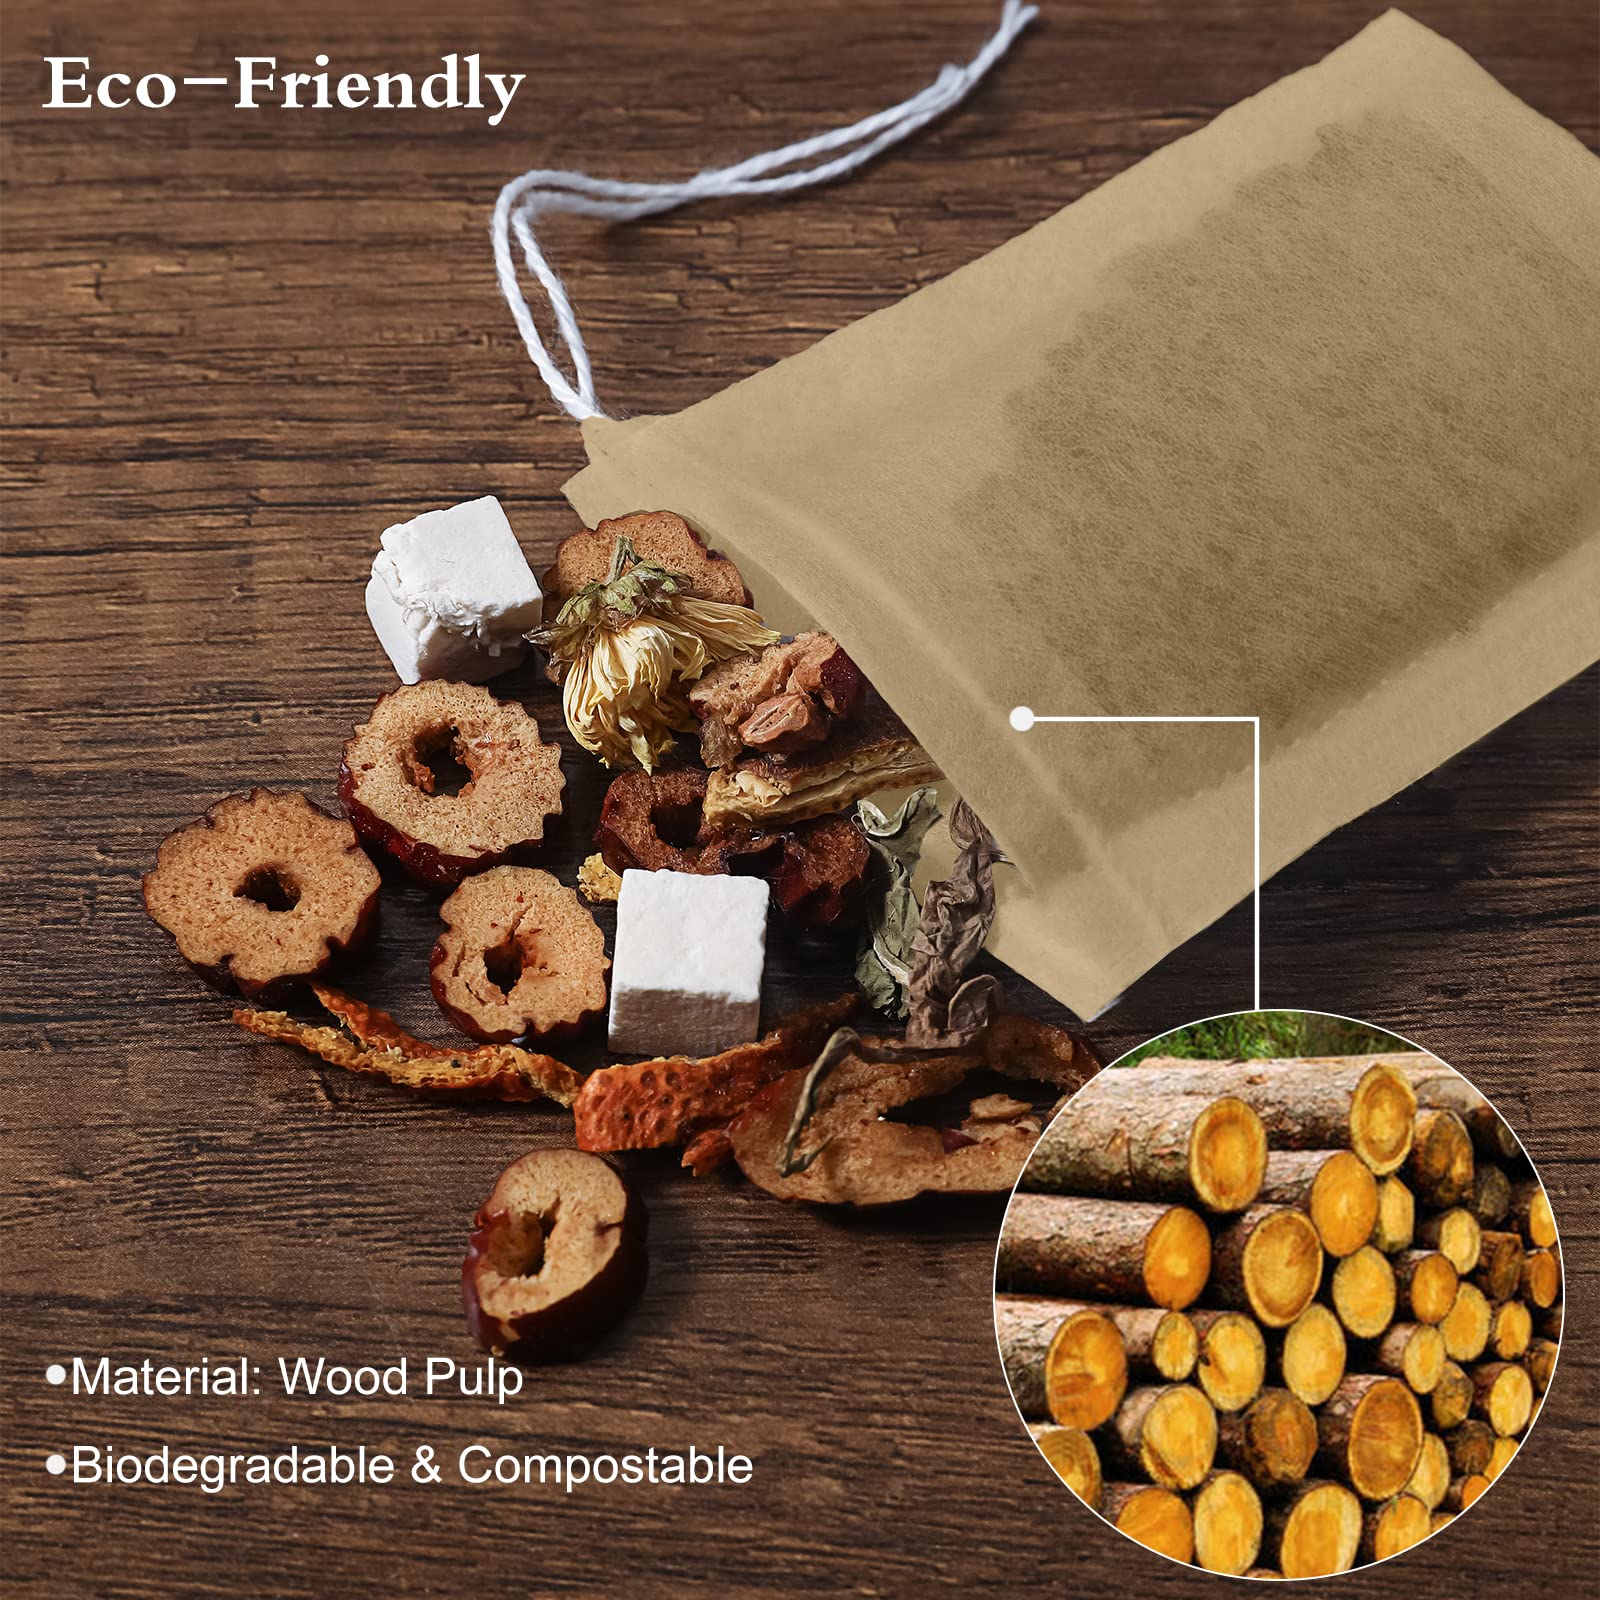 Numola Unbleached Tea Filter Bags for Loose Leaf Tea, Biodegradable and Compostable Tea Bags Empty, Wood Pulp Filter Paper Organic Tea Infuser Bag Disposable Drawstring 100 Pcs (3.2'' x 4.2'')